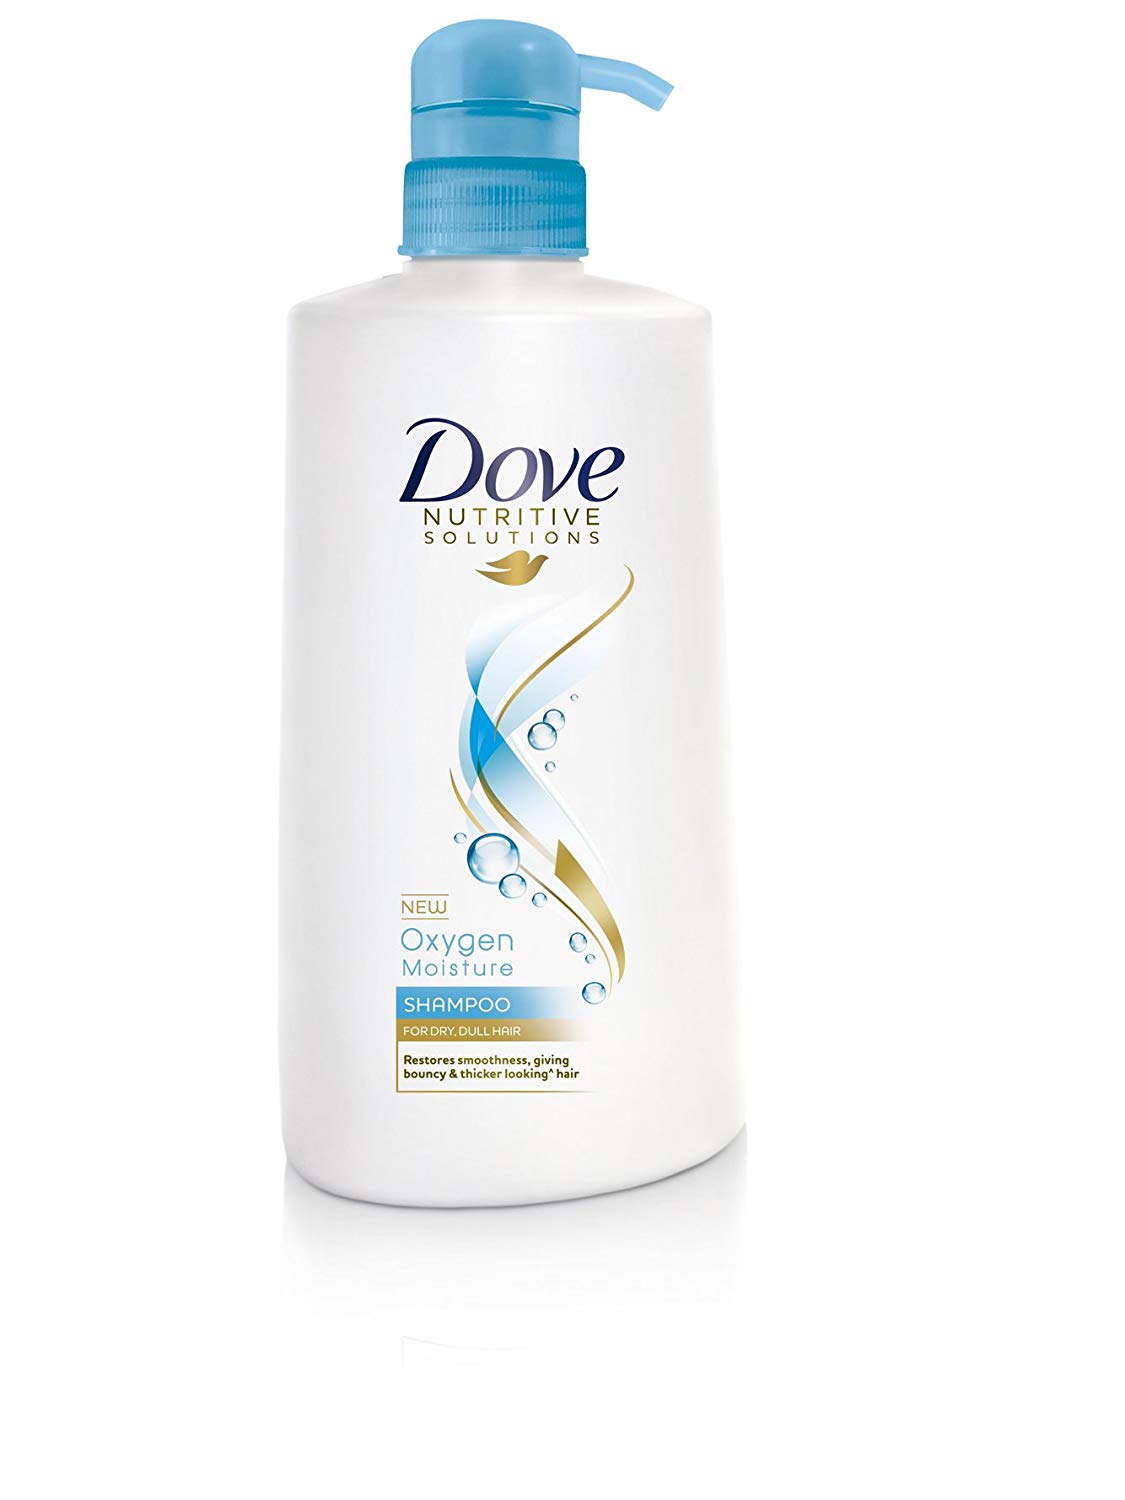 Dove Oxygen Moisture Shampoo, 650ml - In Just ₹157(Worth ₹480)